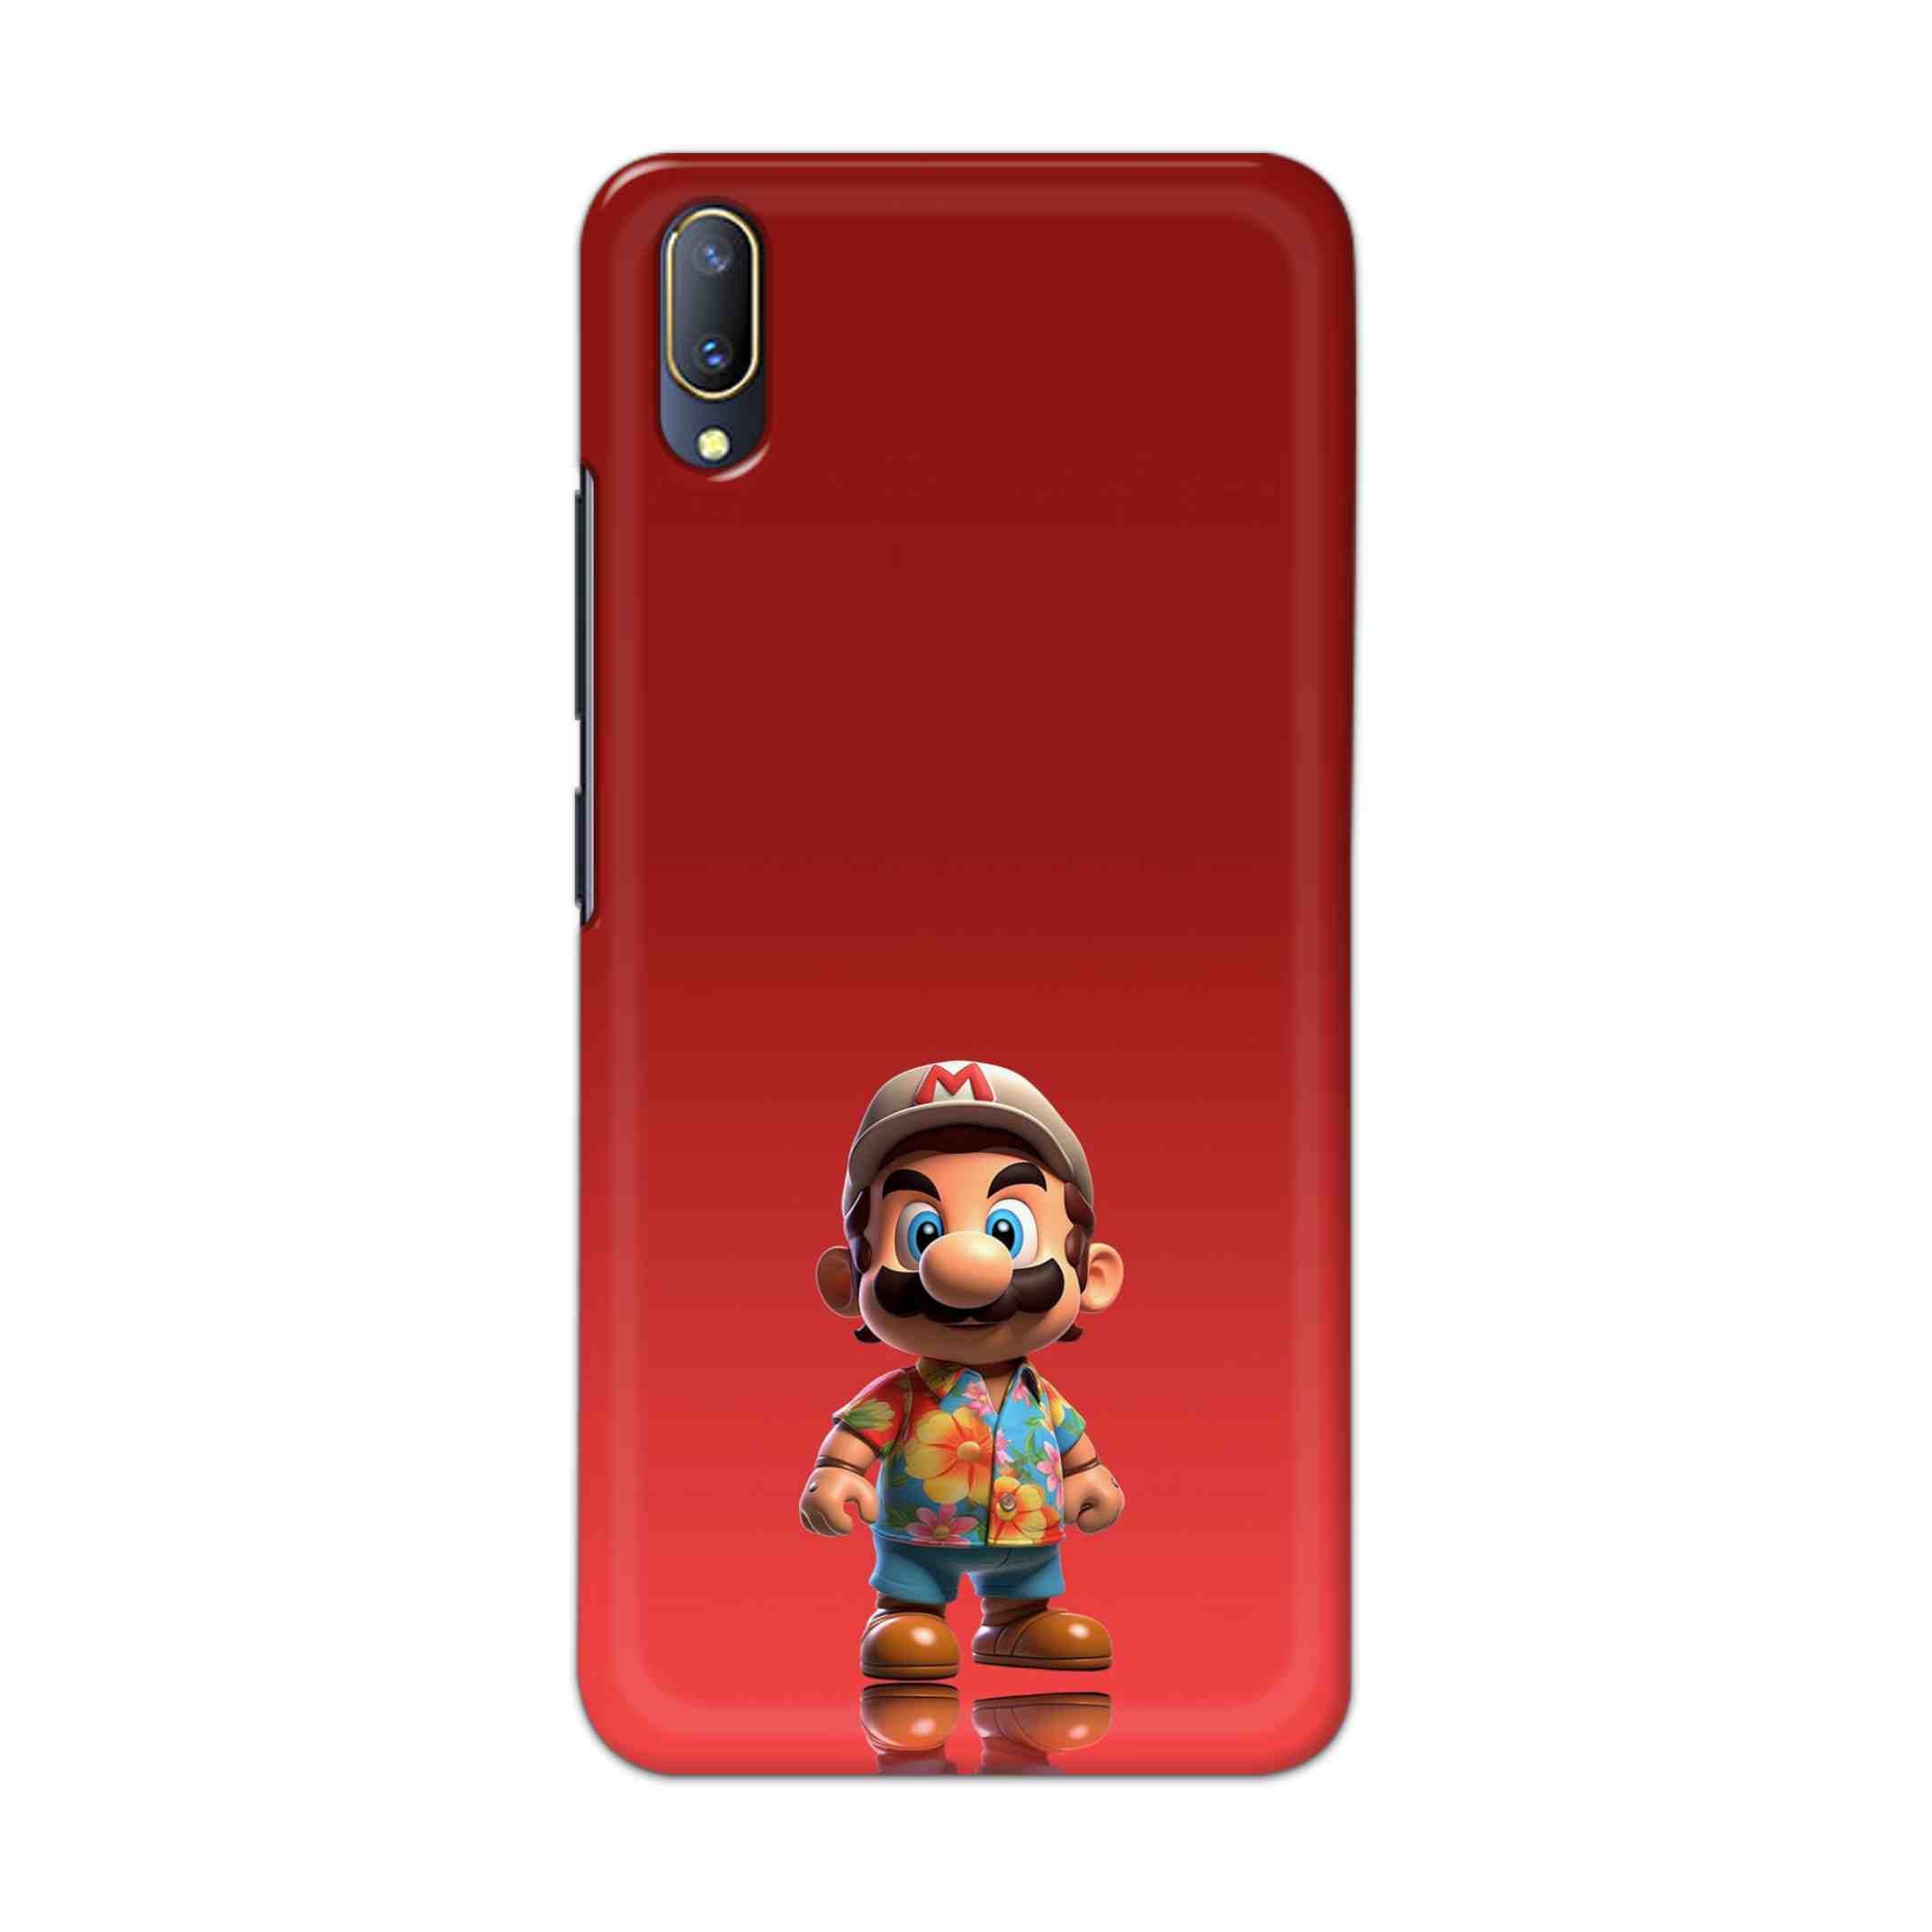 Buy Mario Hard Back Mobile Phone Case Cover For V11 PRO Online